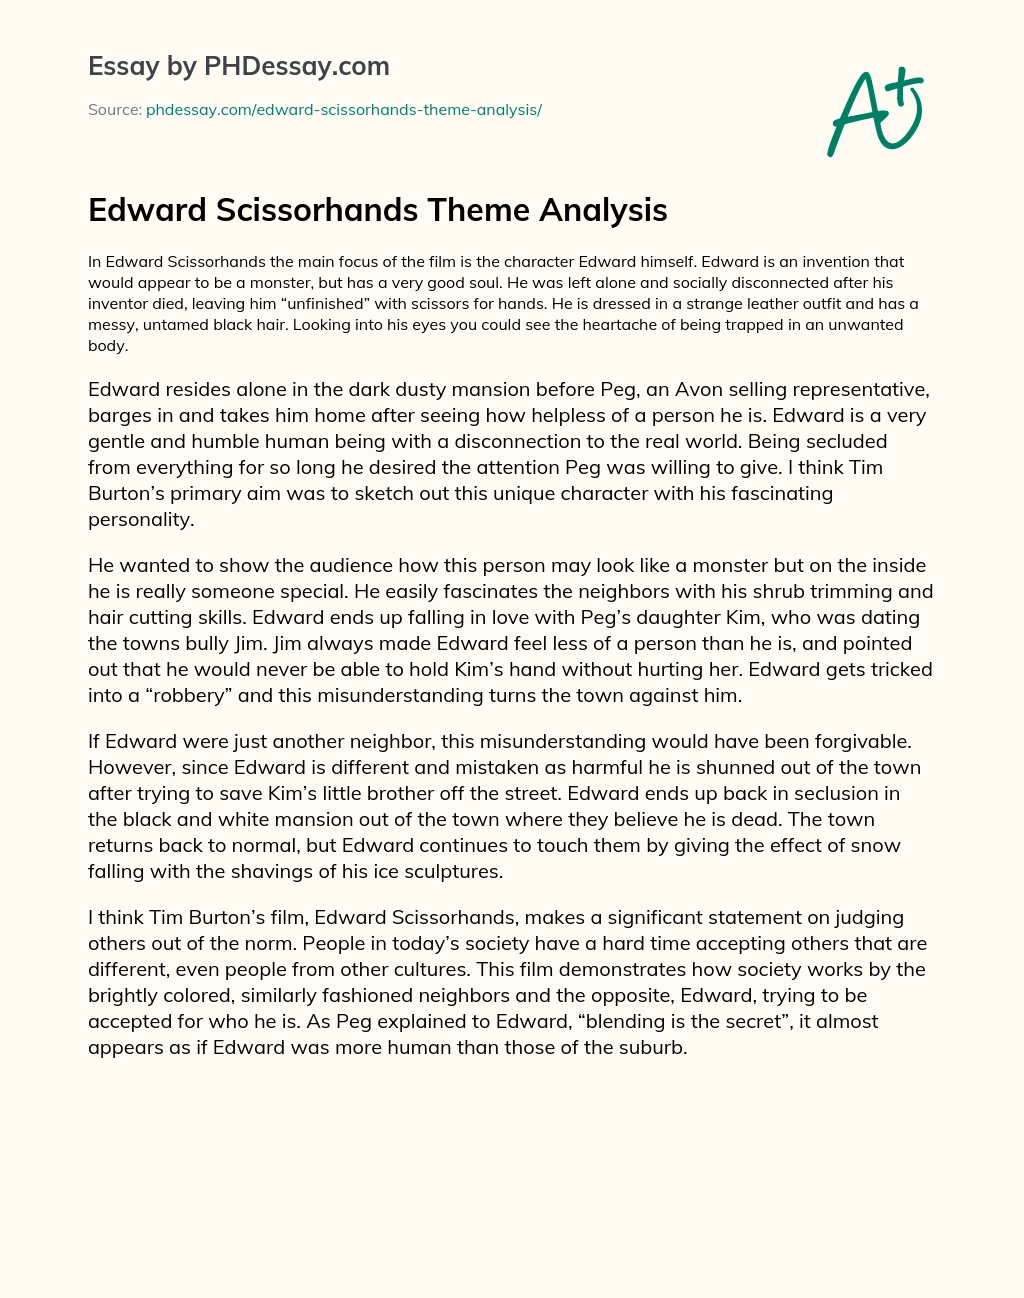 Edward Scissorhands Theme Analysis essay